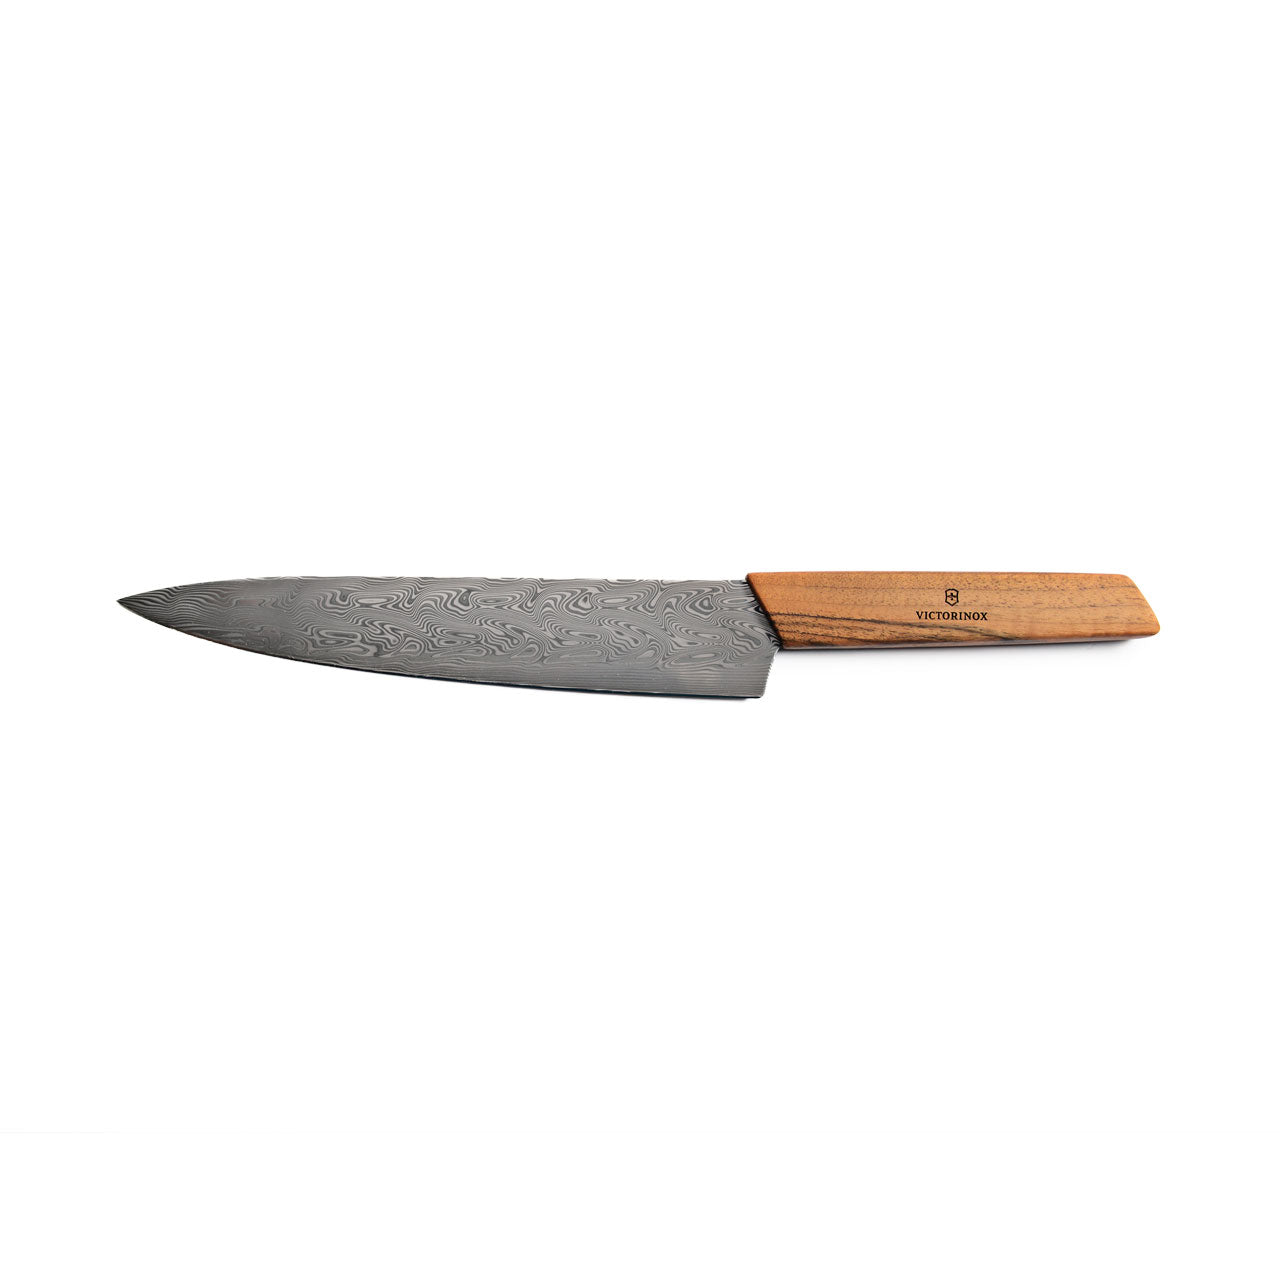 Victorinox Swiss Army Damast Ltd. Edition Carving Knife